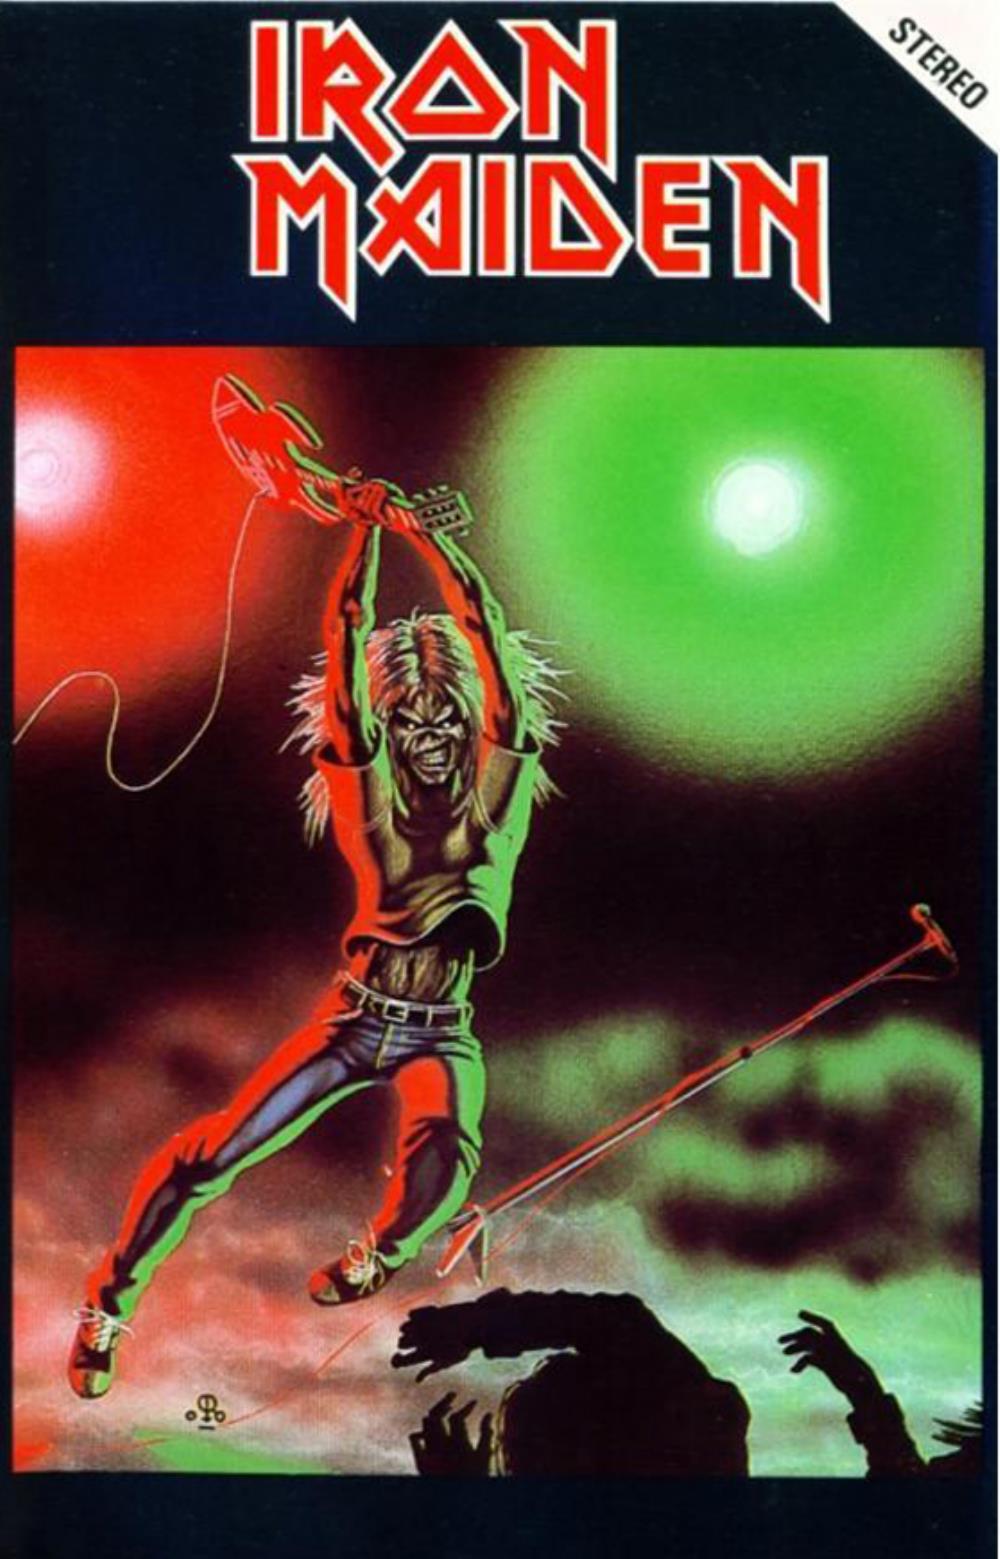 Iron Maiden Live at the Rainbow album cover